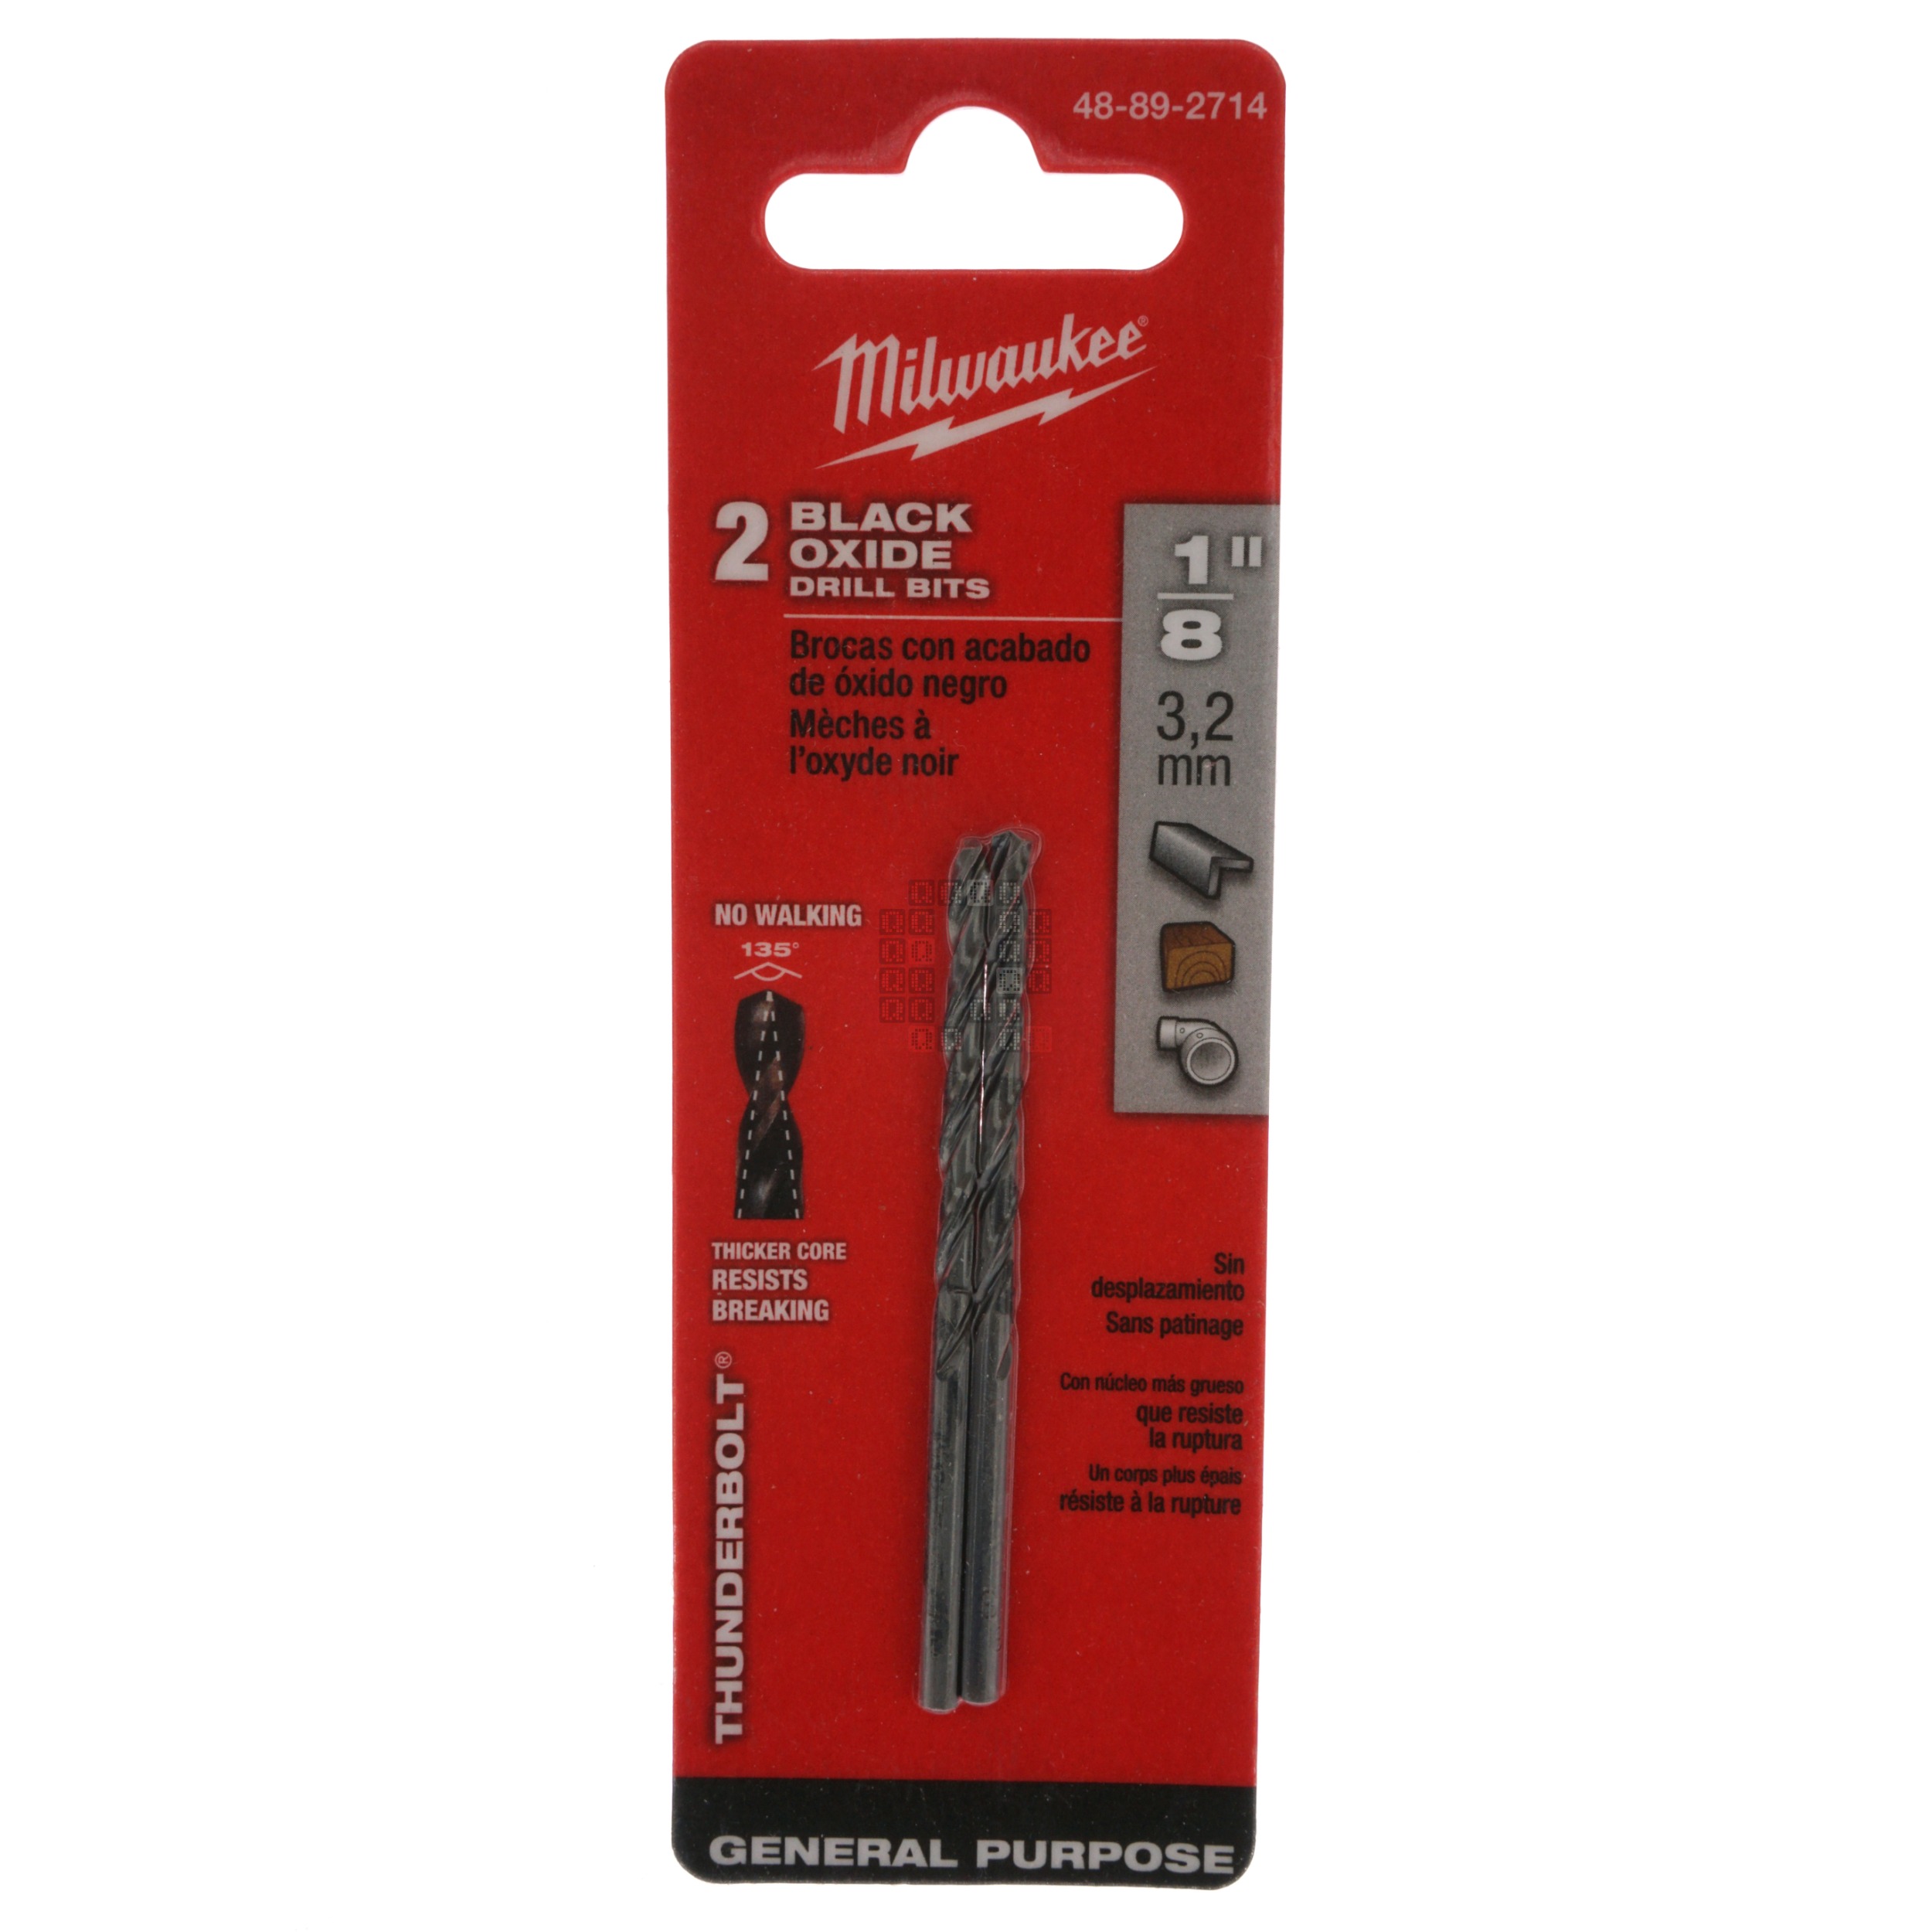 Milwaukee 48-89-2714 THUNDERBOLT Black Oxide Drill Bit, 1/8" 135° Point, 2-Pack